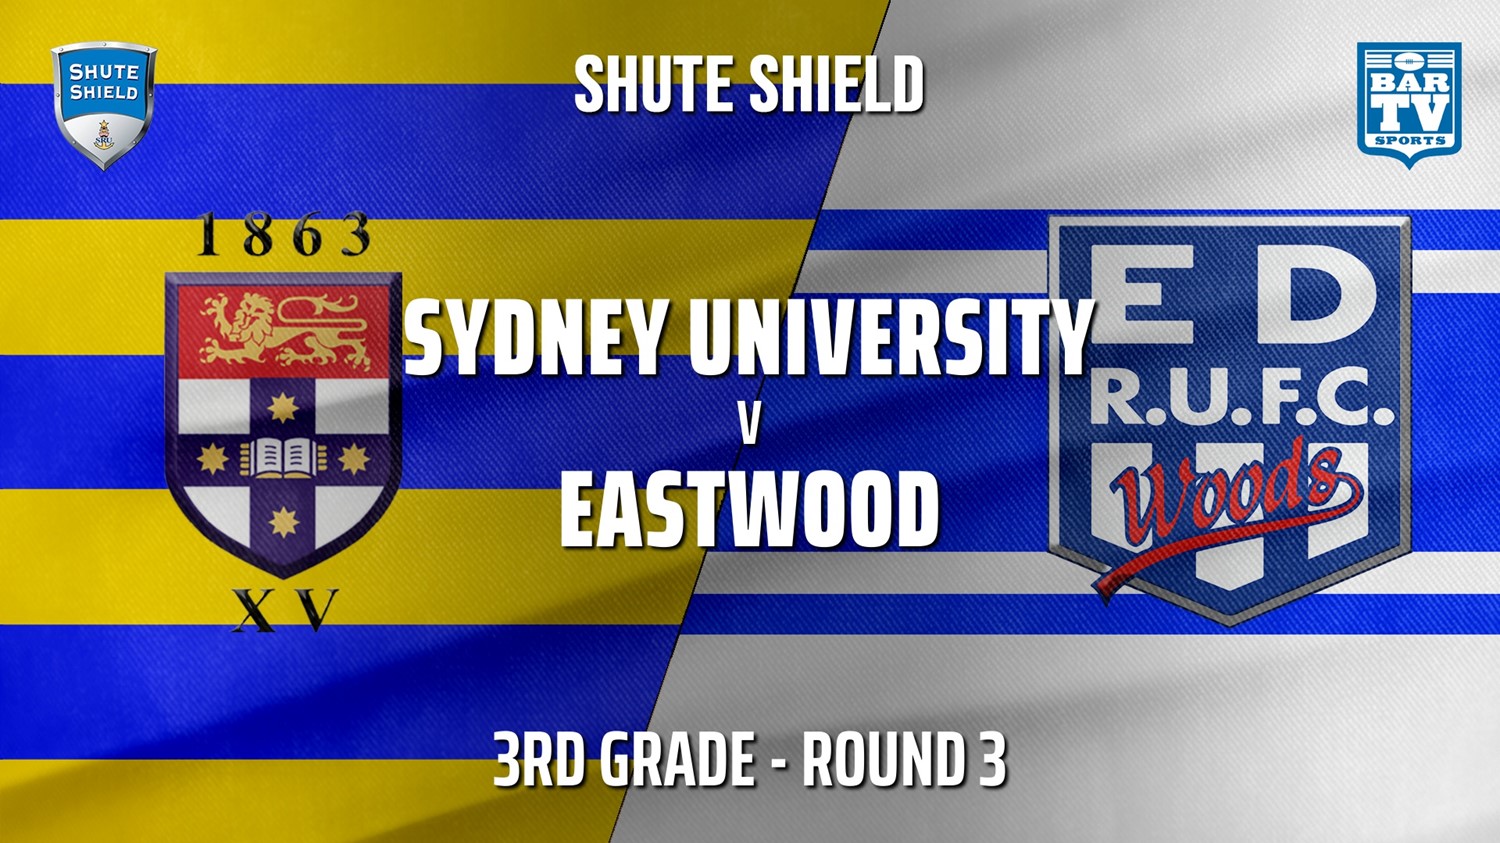 210421-Shute Shield Round 3 - 3rd Grade - Sydney University v Eastwood Minigame Slate Image